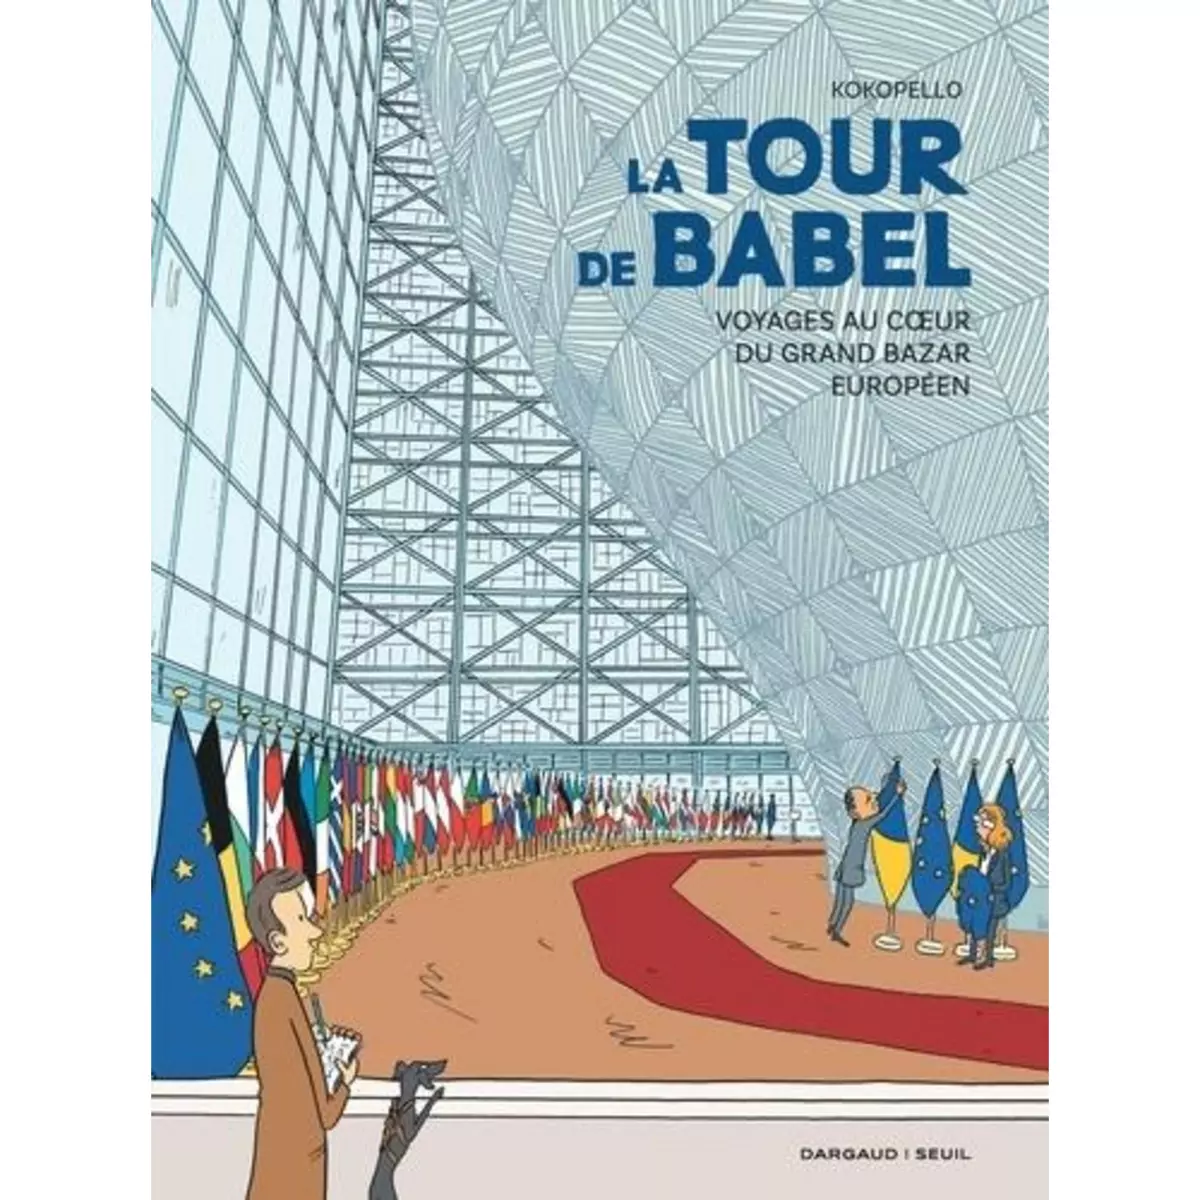  LA TOUR DE BABEL. VOYAGES AU COEUR DU GRAND BAZAR EUROPEEN, Kokopello